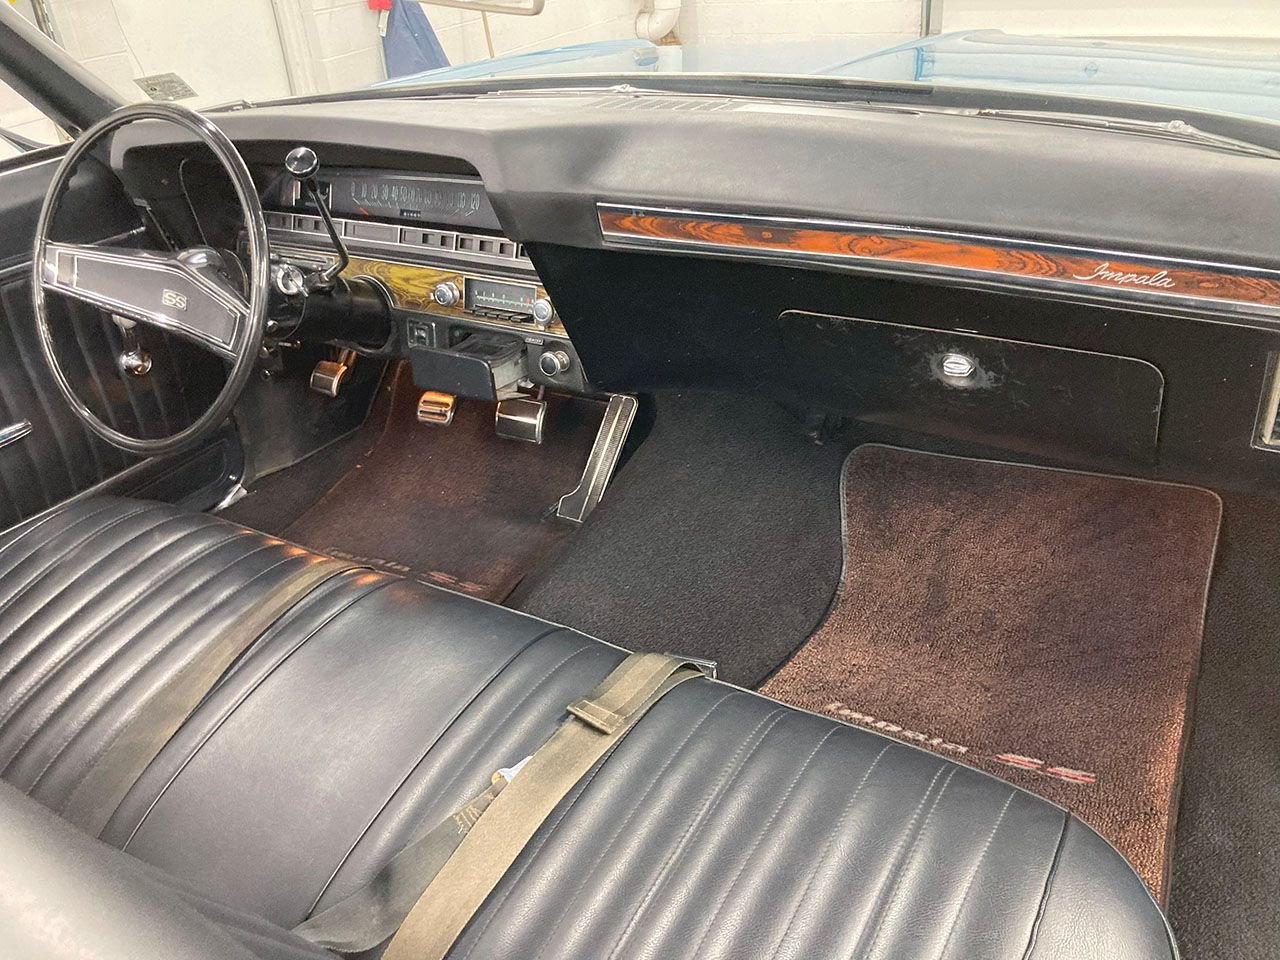 For Sale 1969 Chevrolet Impala